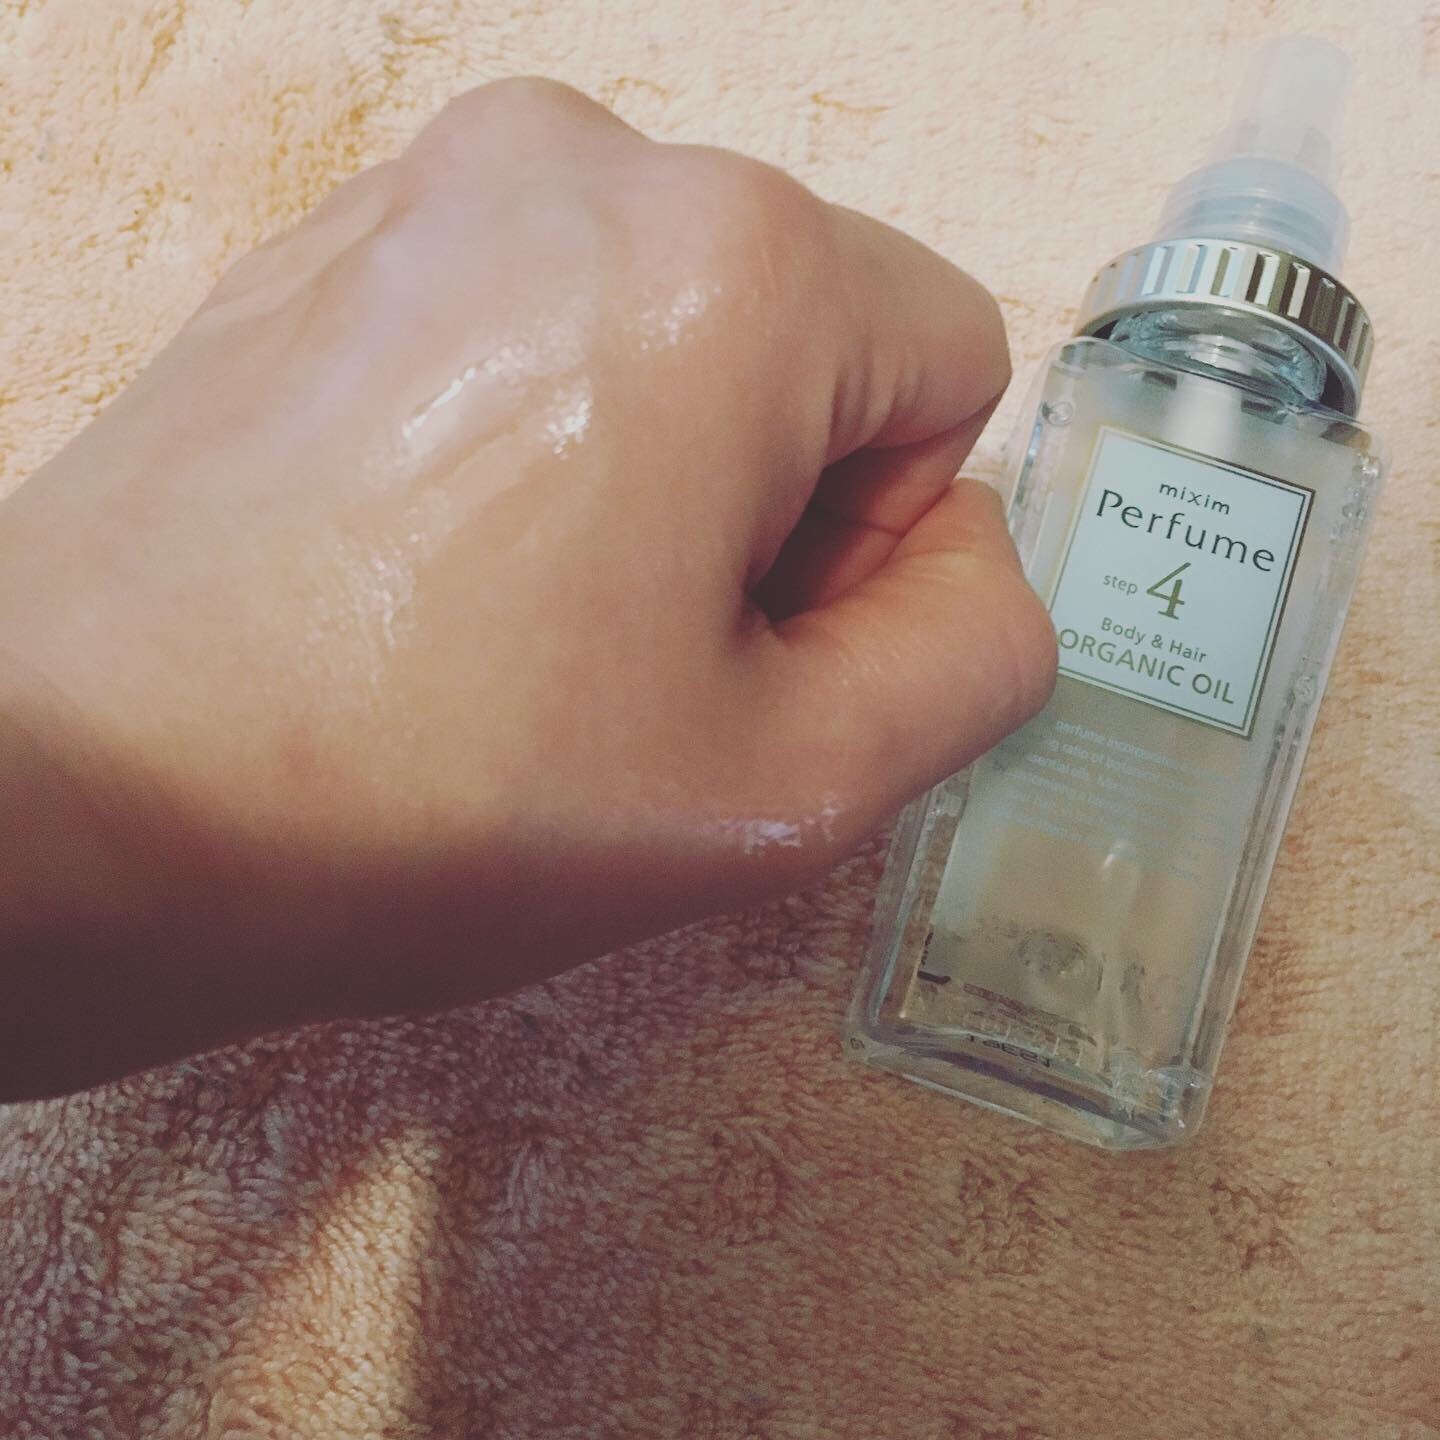 mixim（ミクシム） / mixim Perfume シア美容オイルミストの公式商品 